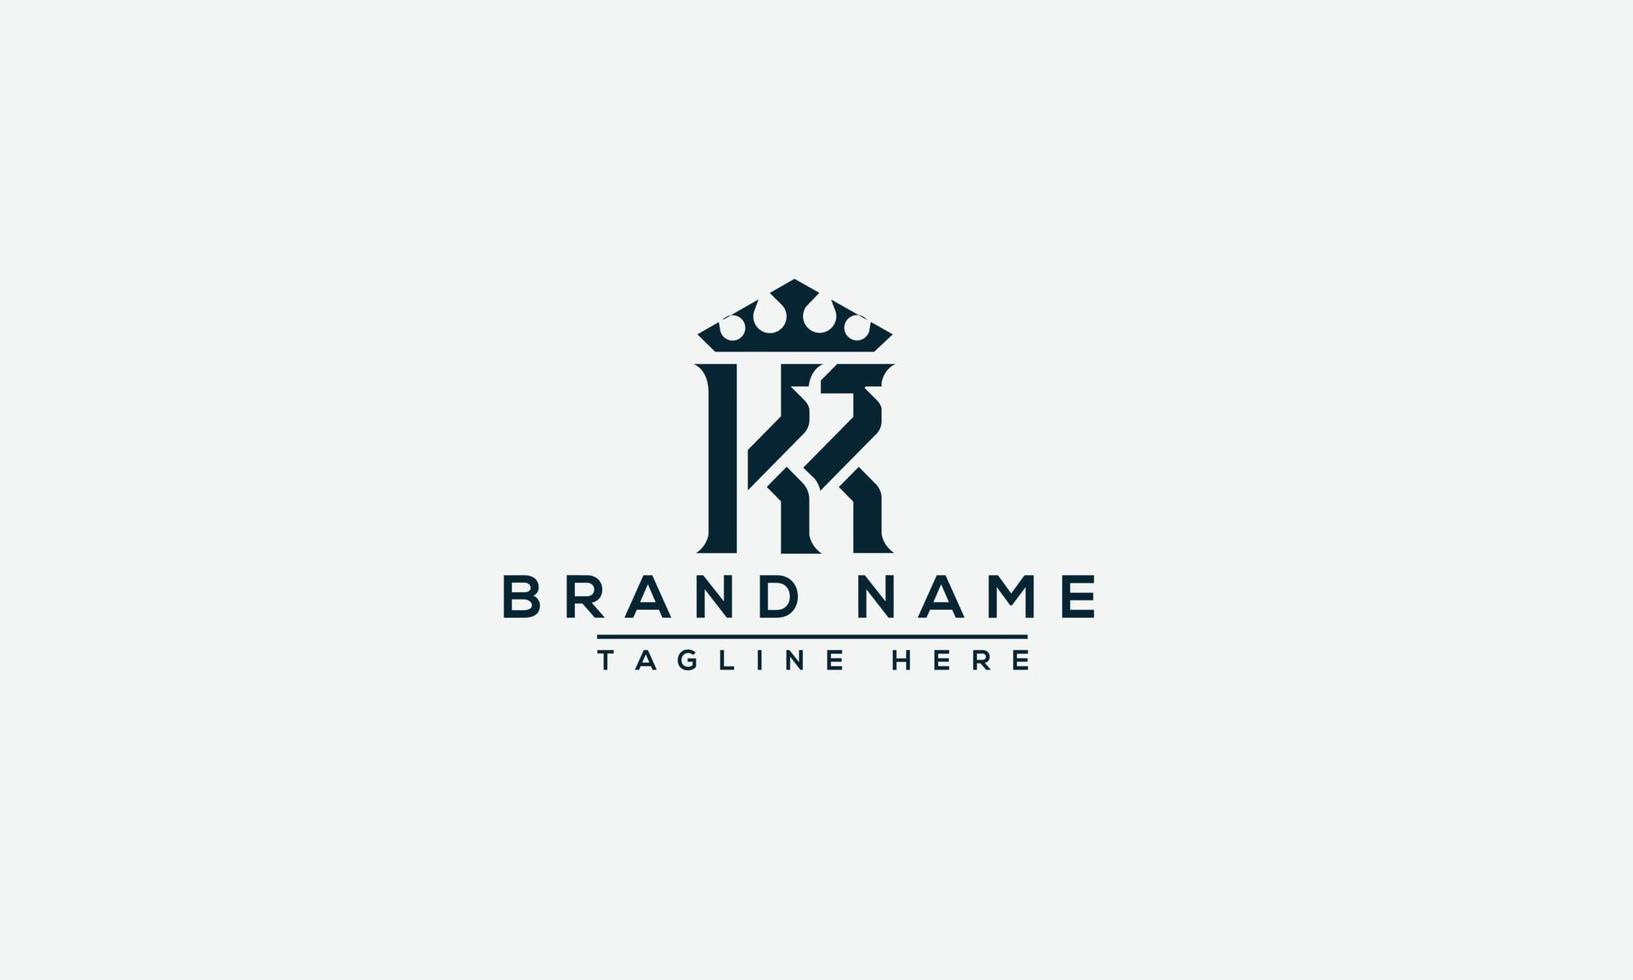 elemento de branding gráfico de vetor de modelo de design de logotipo kr.